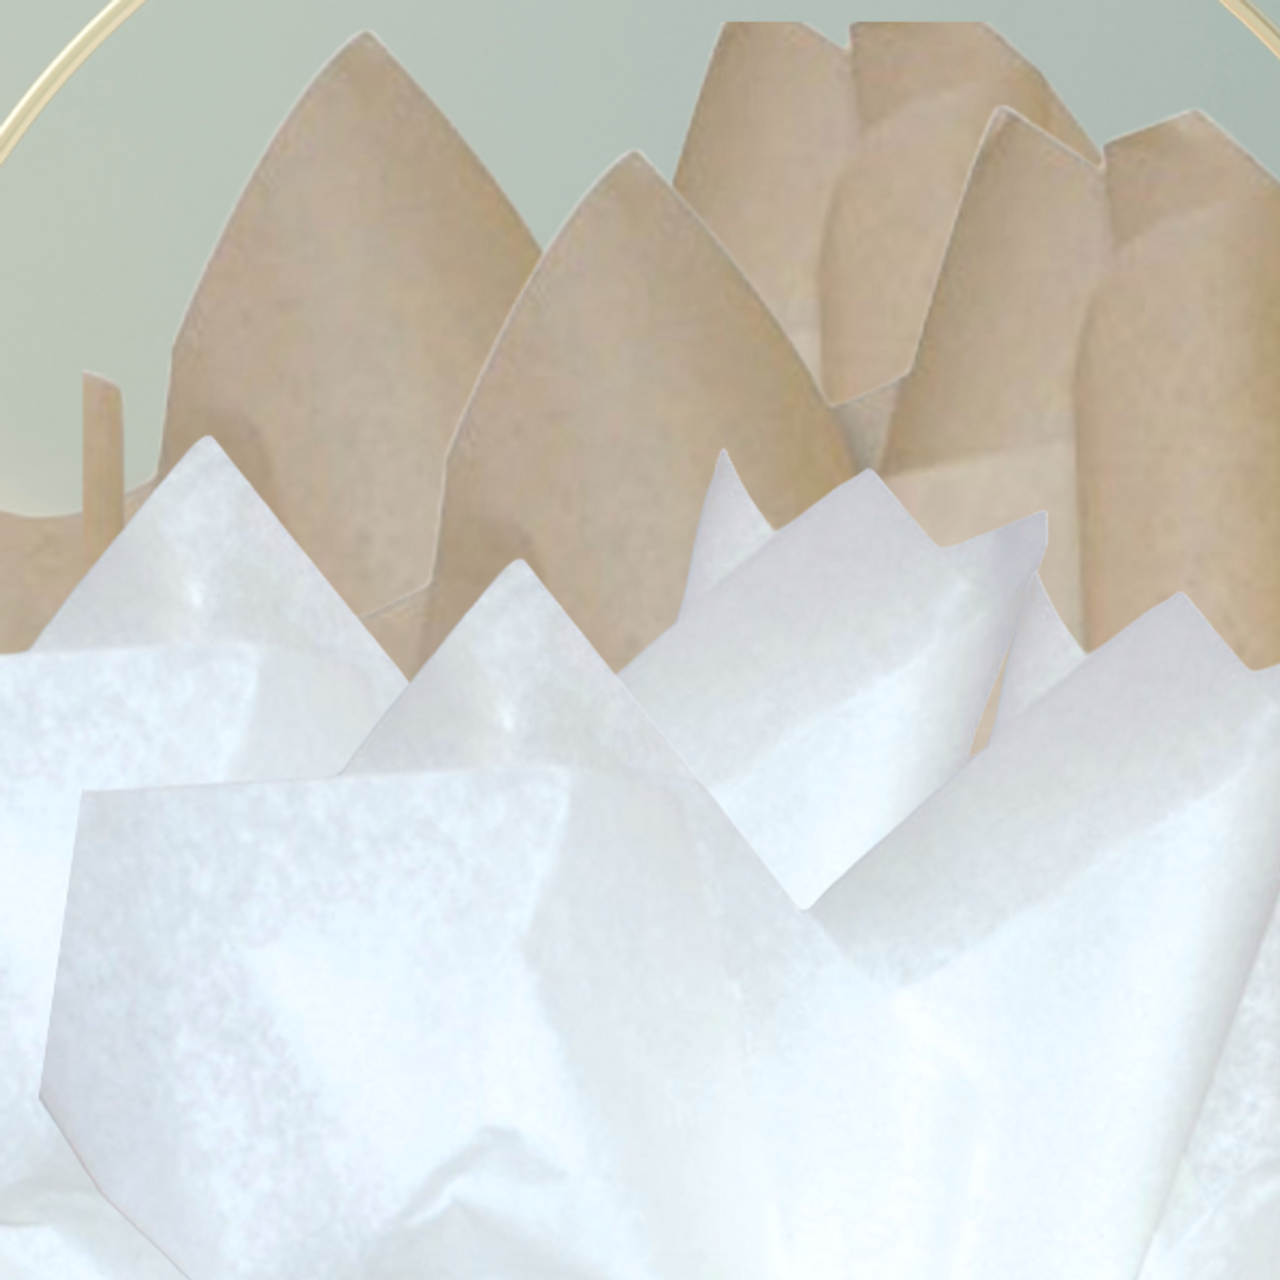 Kraft & White Tissue - Sheets & Rolls